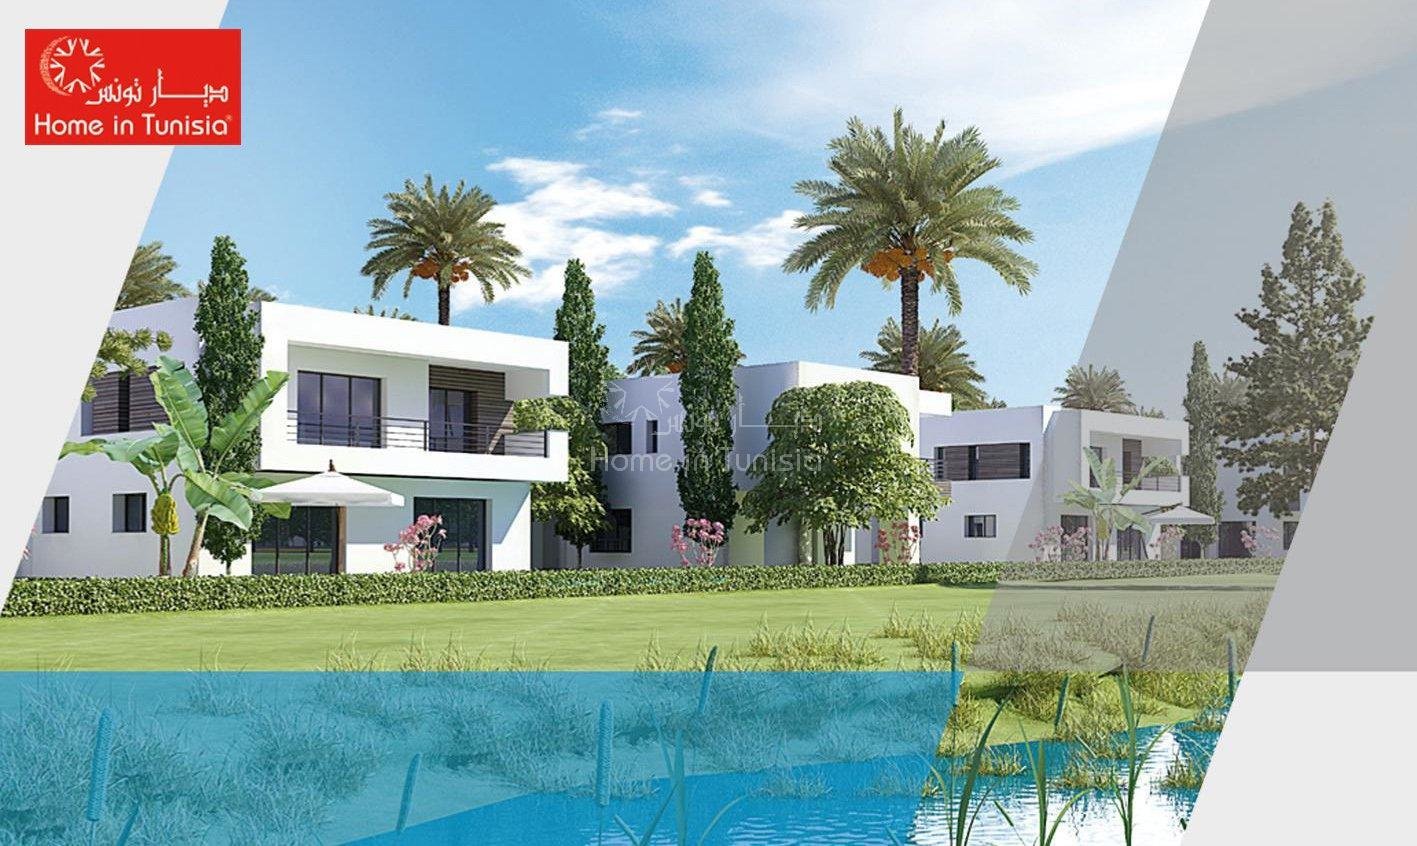 Villa golf jumelée neuve de 277.77 m2 avec 4 chambres terrasse jardin piscine